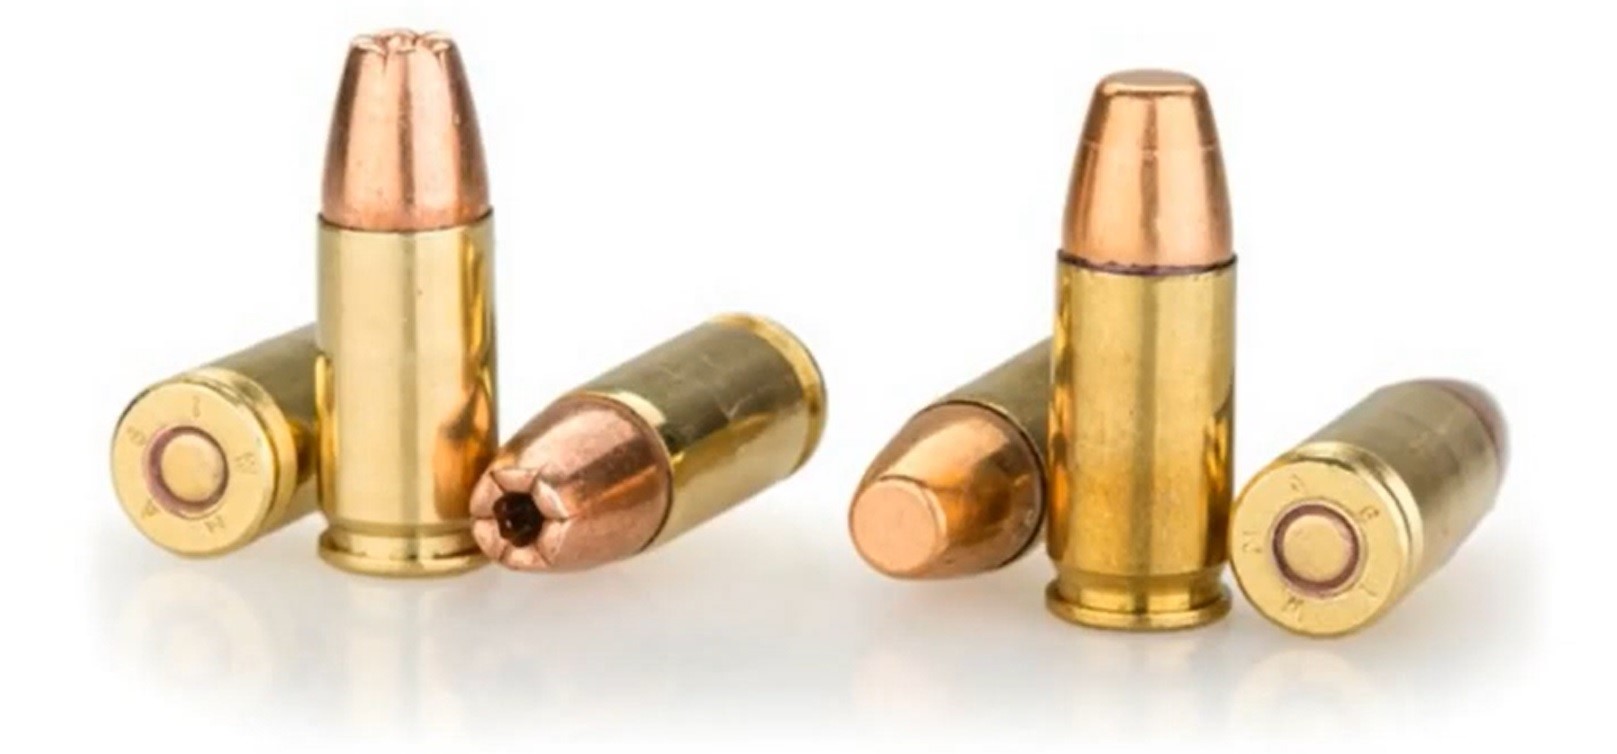 New 9mm ammo for M17/M18 modular handgun